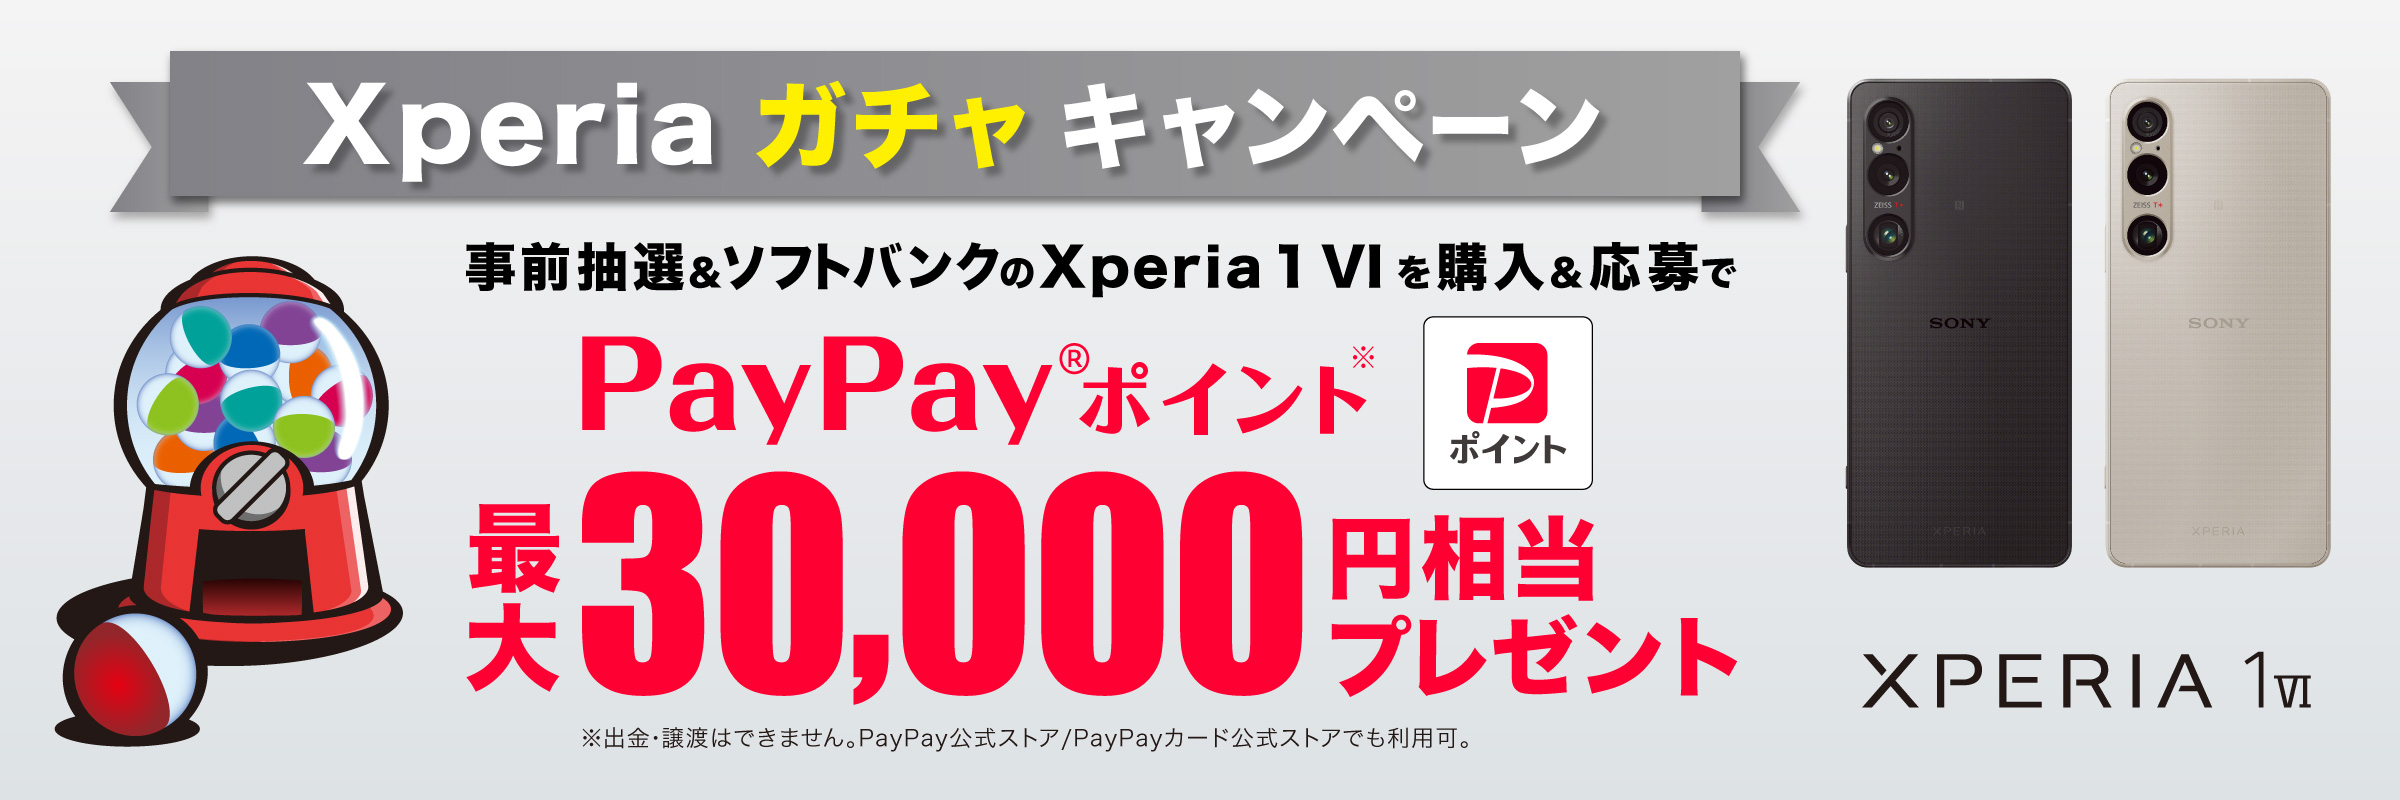 Xperia ガチャ キャンペーン 事前抽選＆ソフトバンクの Xperia 1 VI を購入＆応募で PayPayポイント 最大30,000円相当プレゼント※出金と譲渡はできません。PayPay/PayPayカード公式ストアでも利用可。